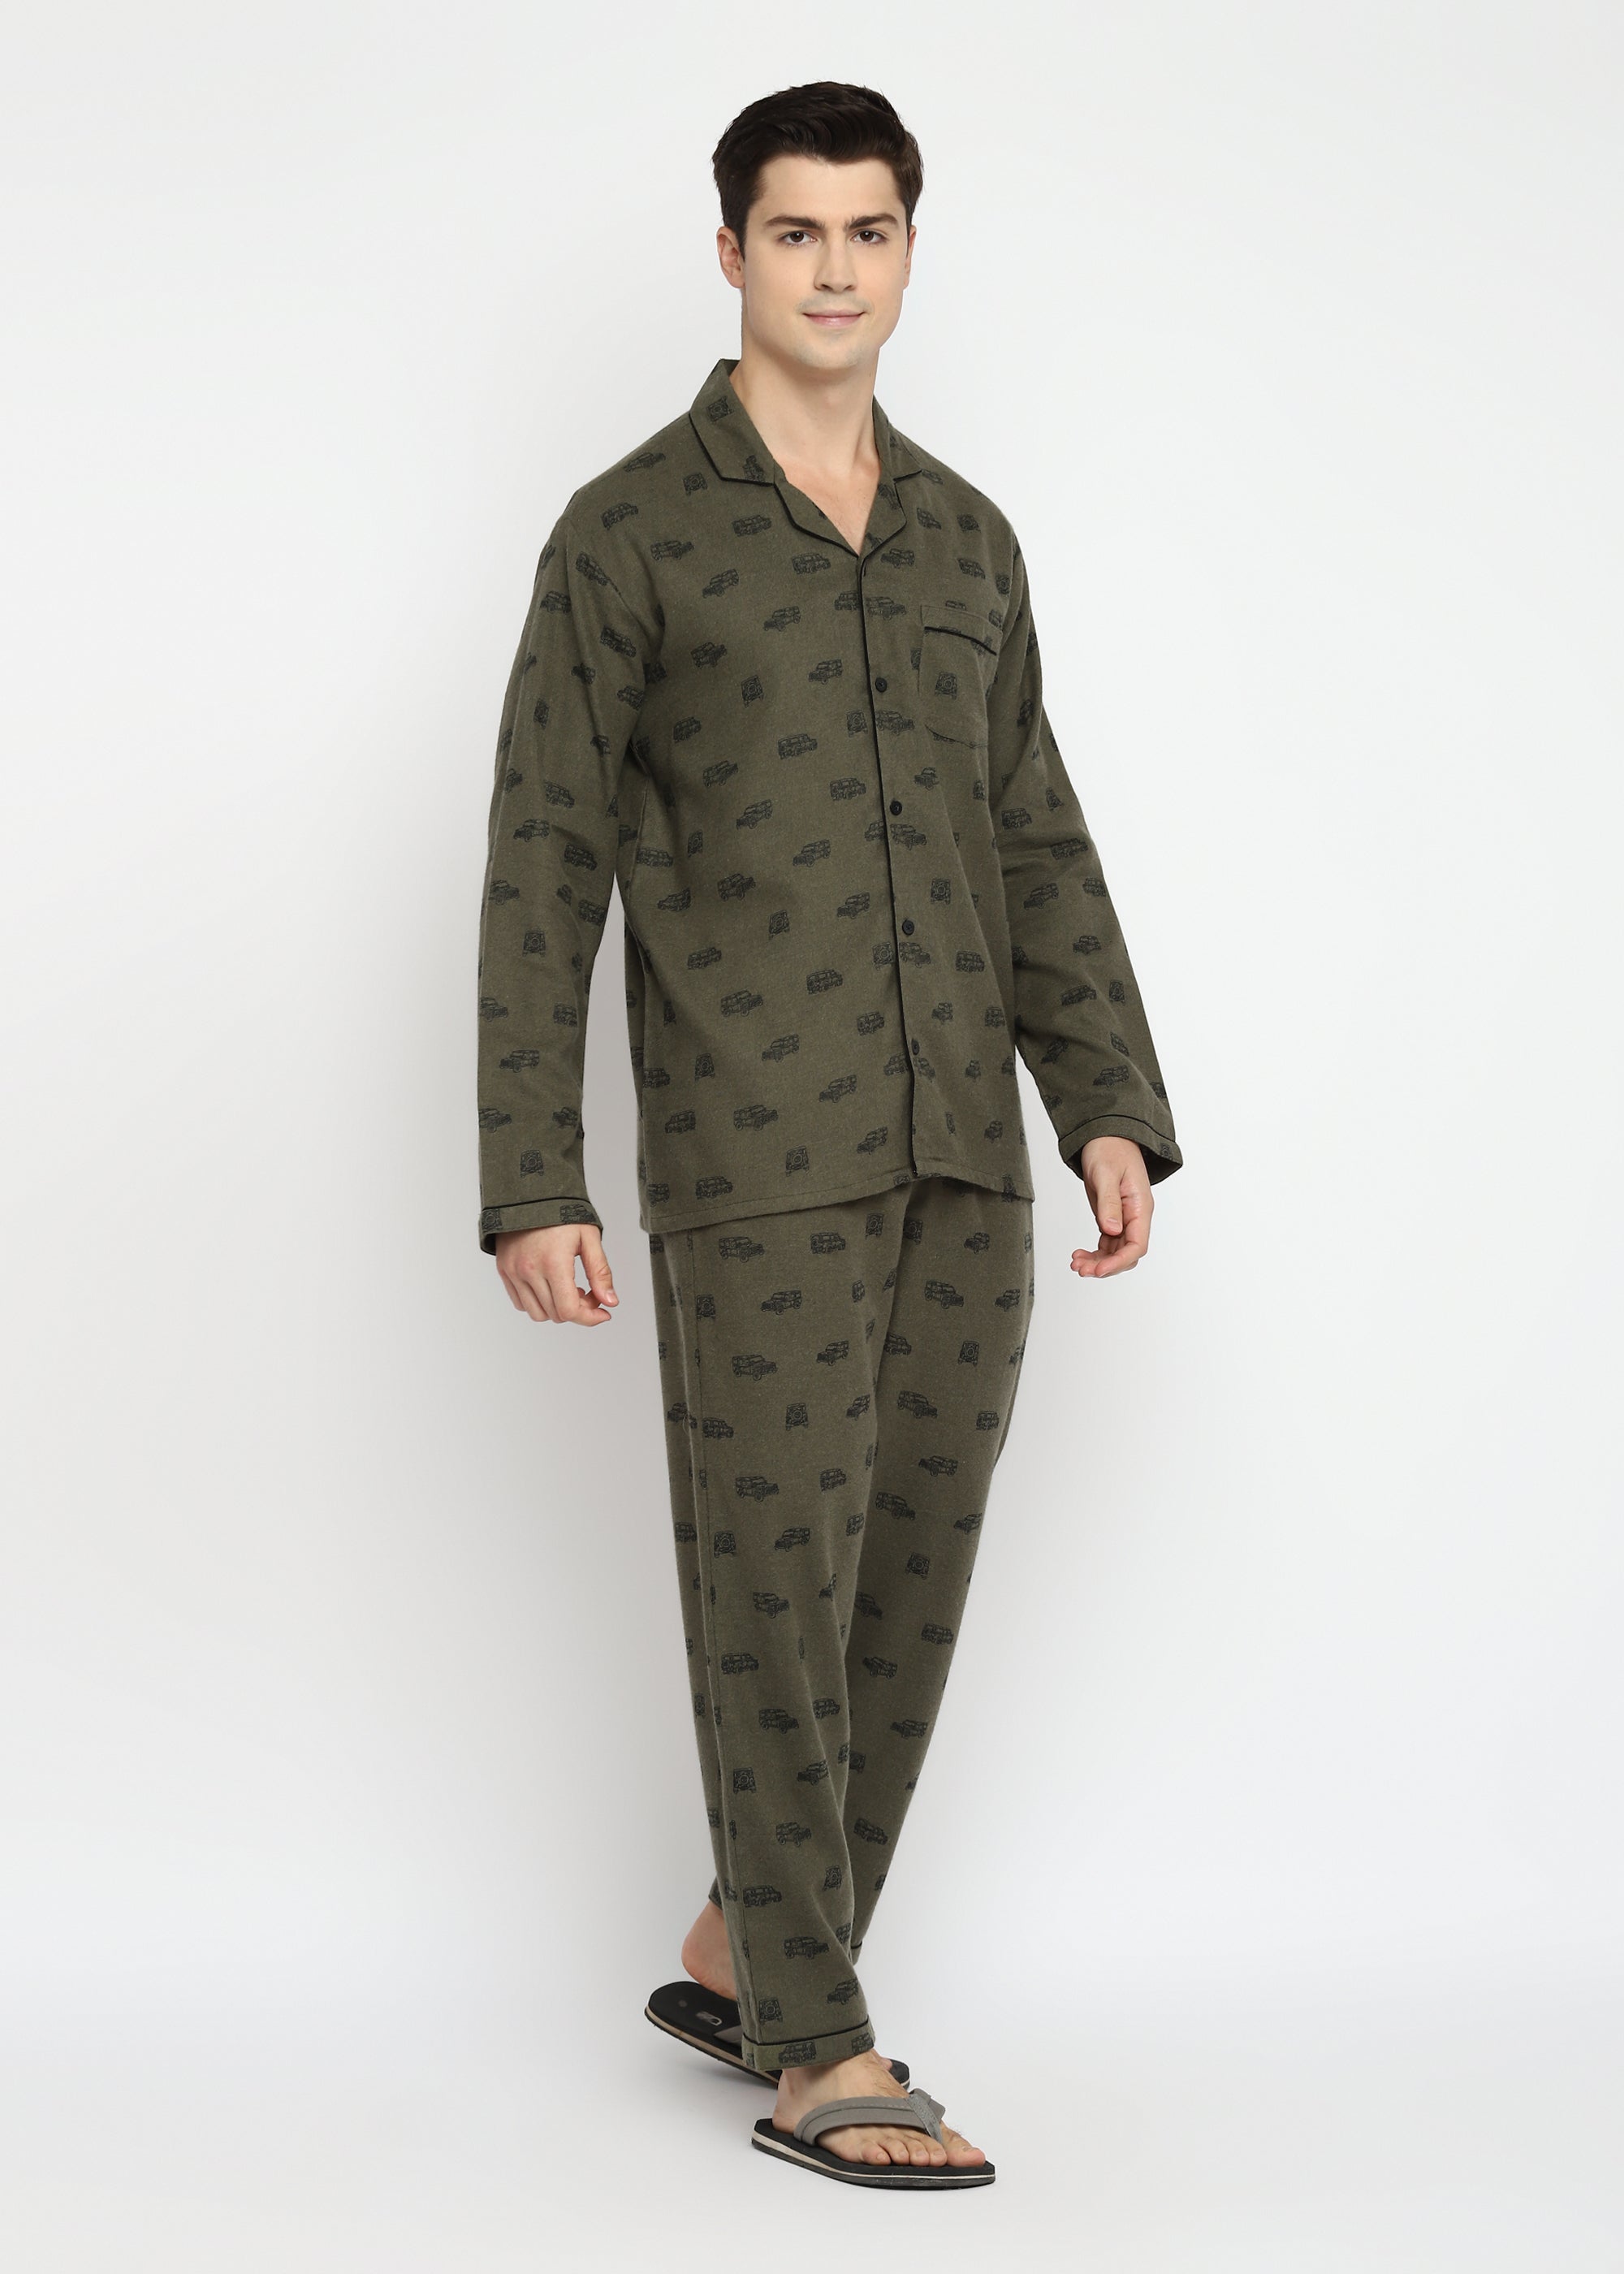 Jeep Print Cotton Flannel Long Sleeve Men's Night Suit - Shopbloom